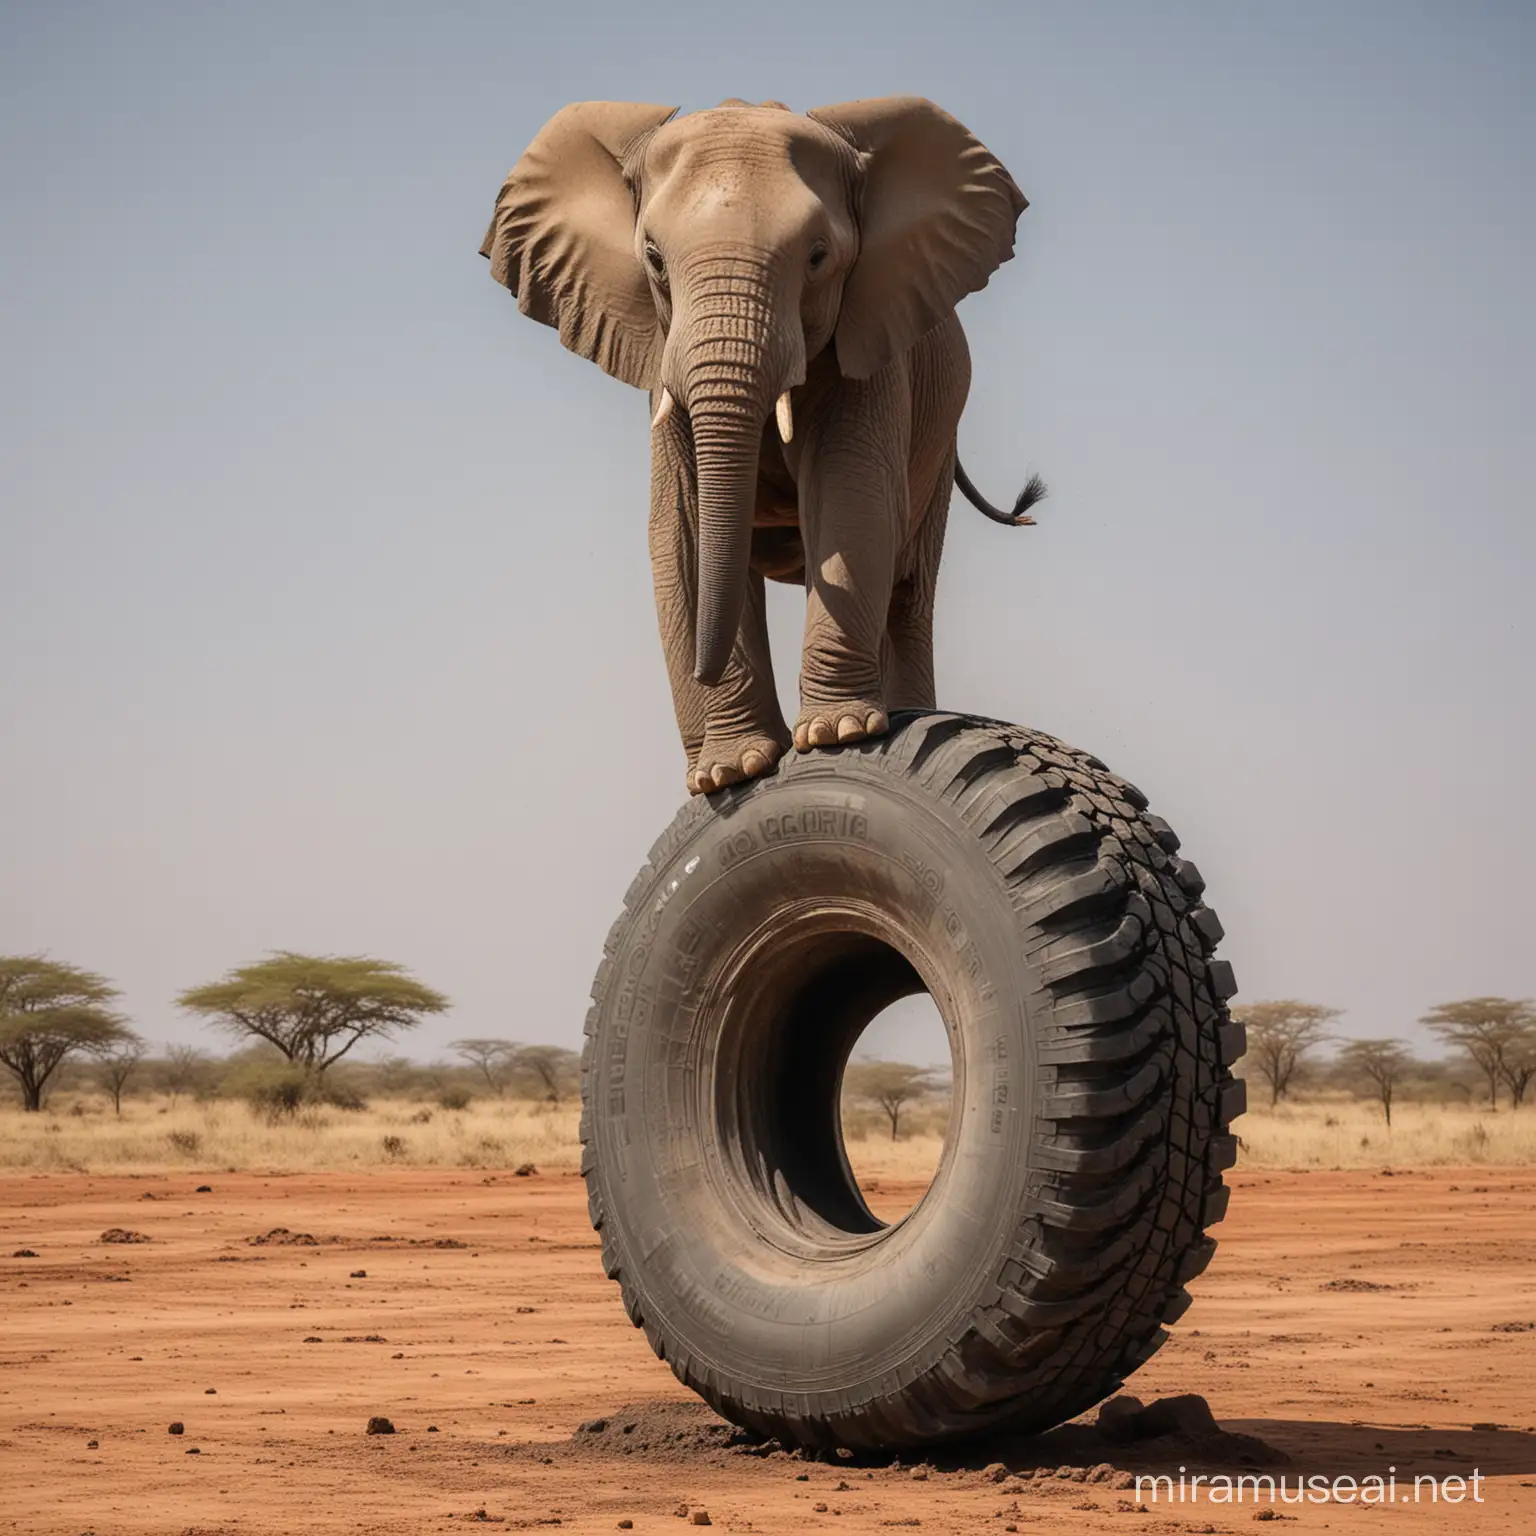 Elephant Balancing Act on Deflating Tire